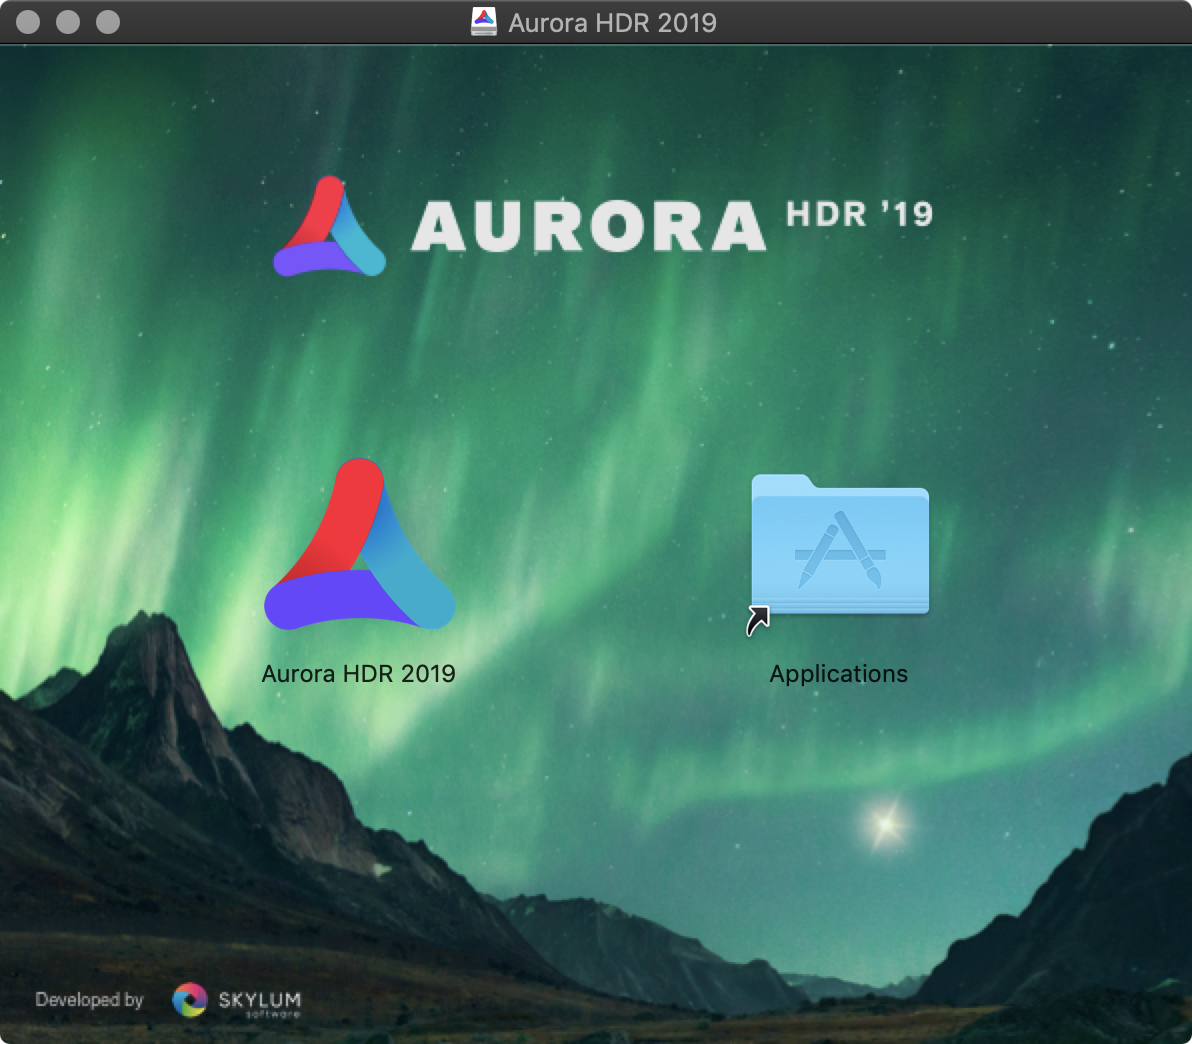 Aurora HDR for mac instal